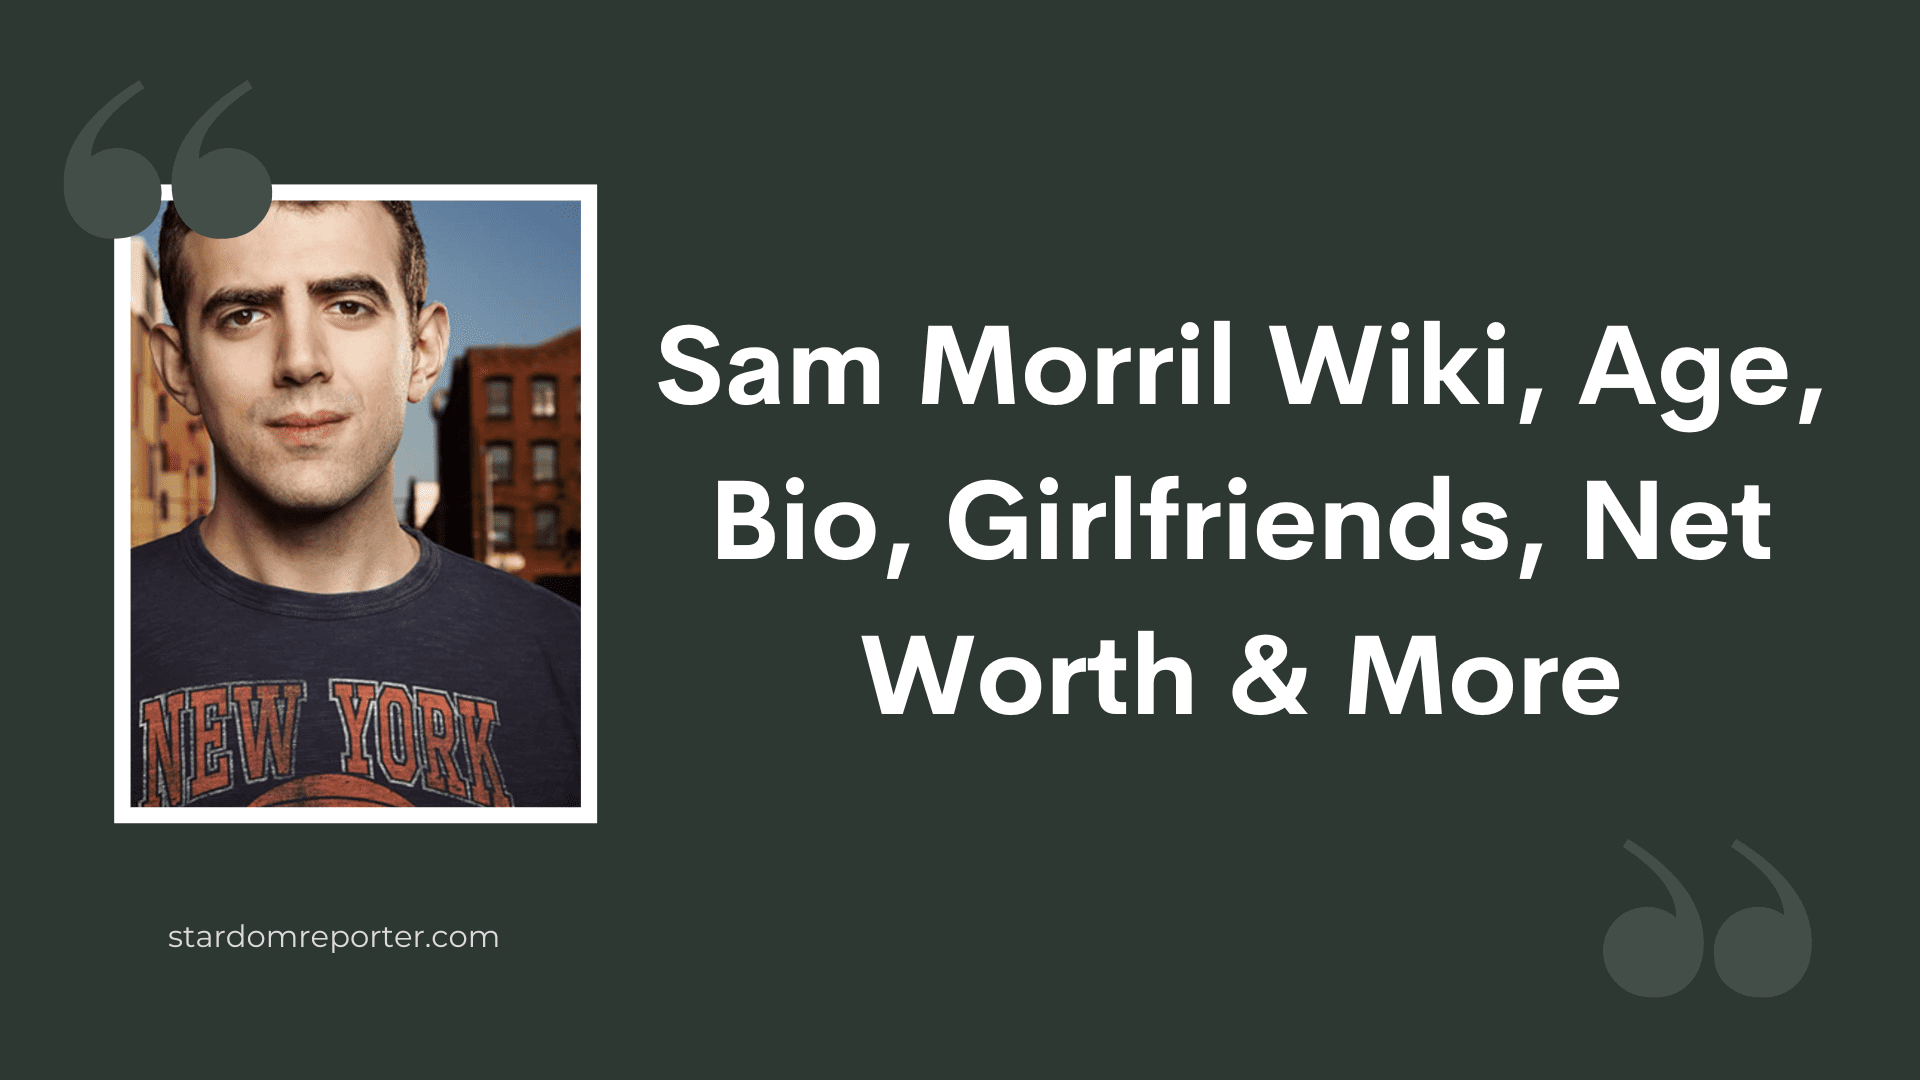 Sam Morril Wiki, Age, Bio, Girlfriends, Net Worth & More - 9